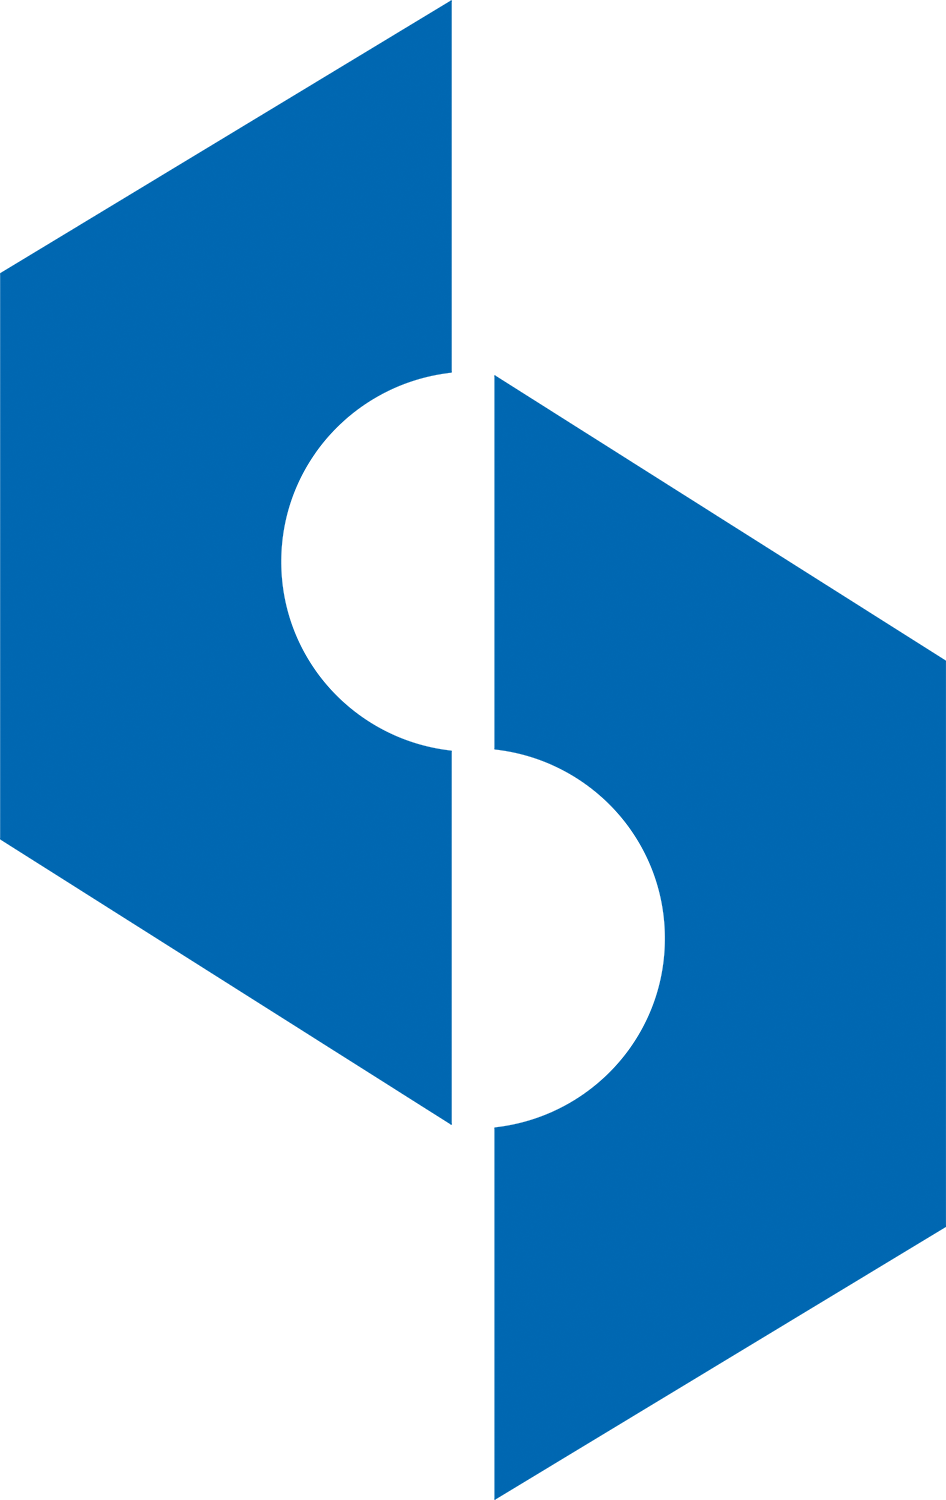 Scantool logo